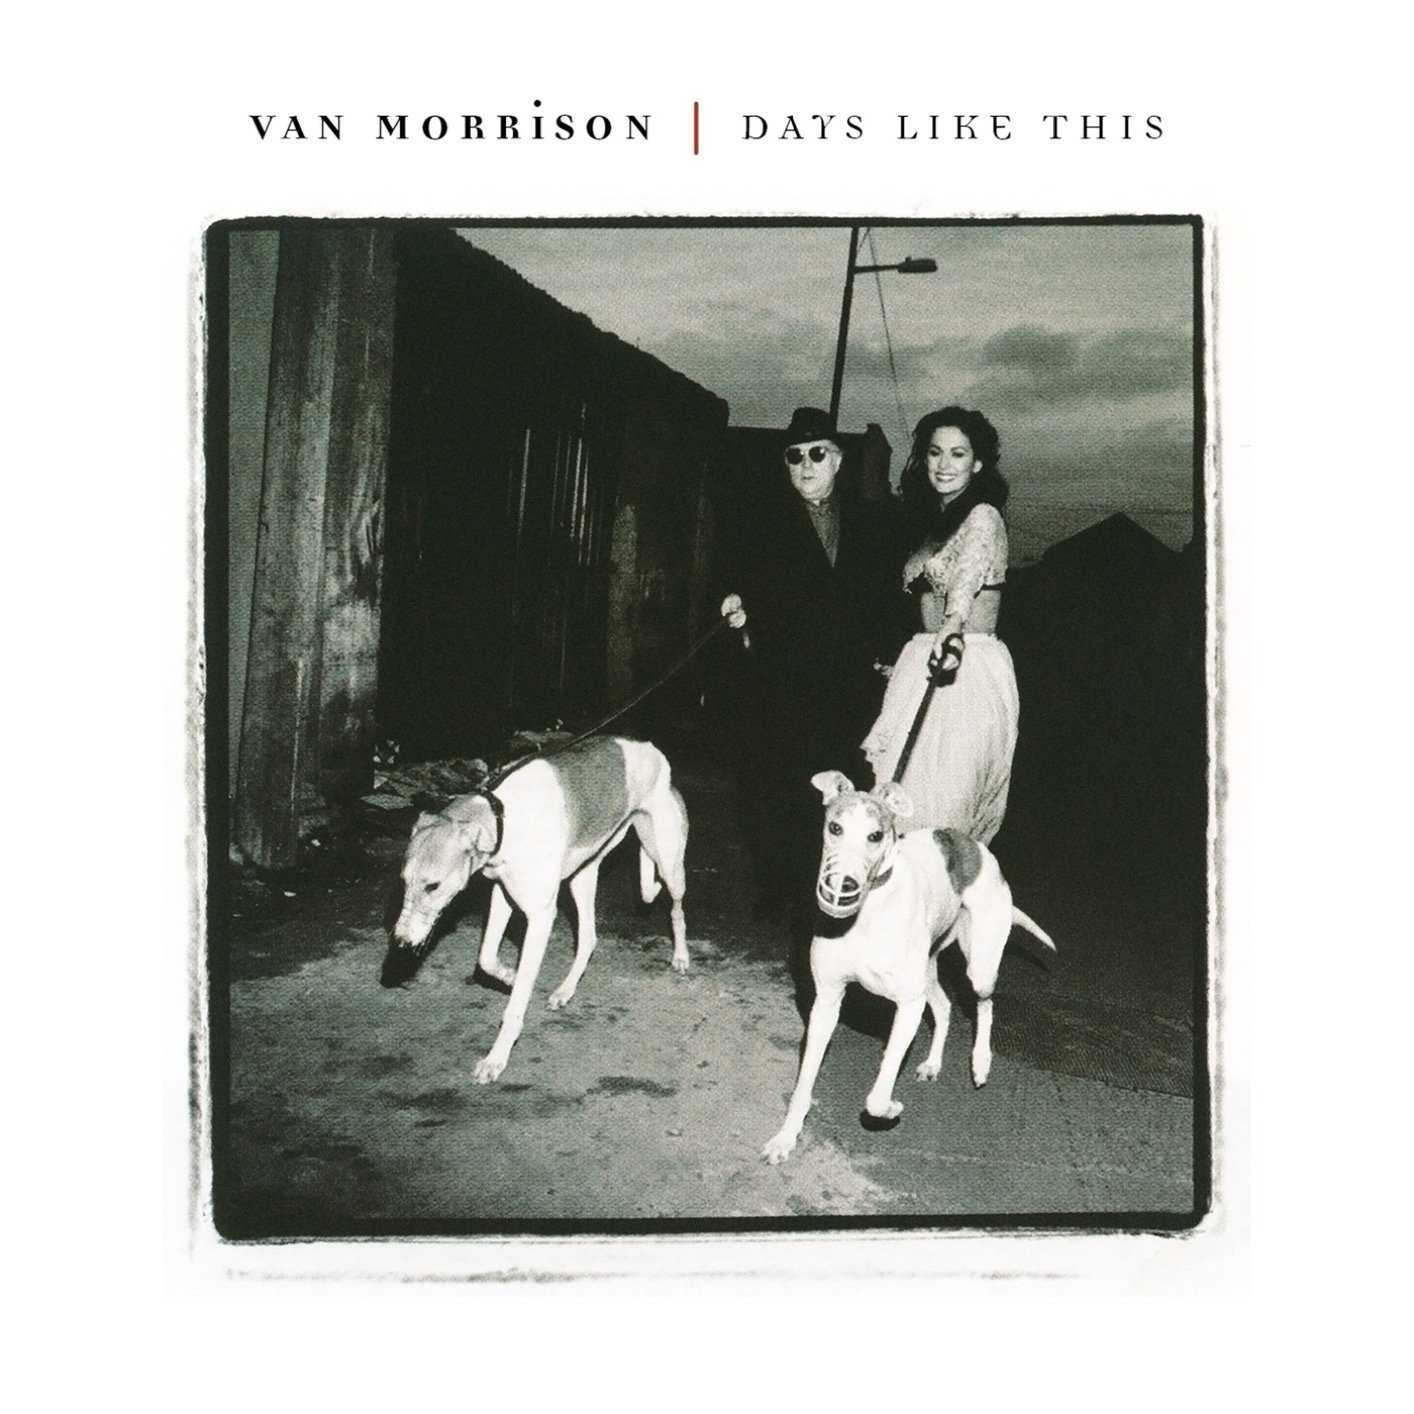 Morrison “The Album Covers” — Past Prime